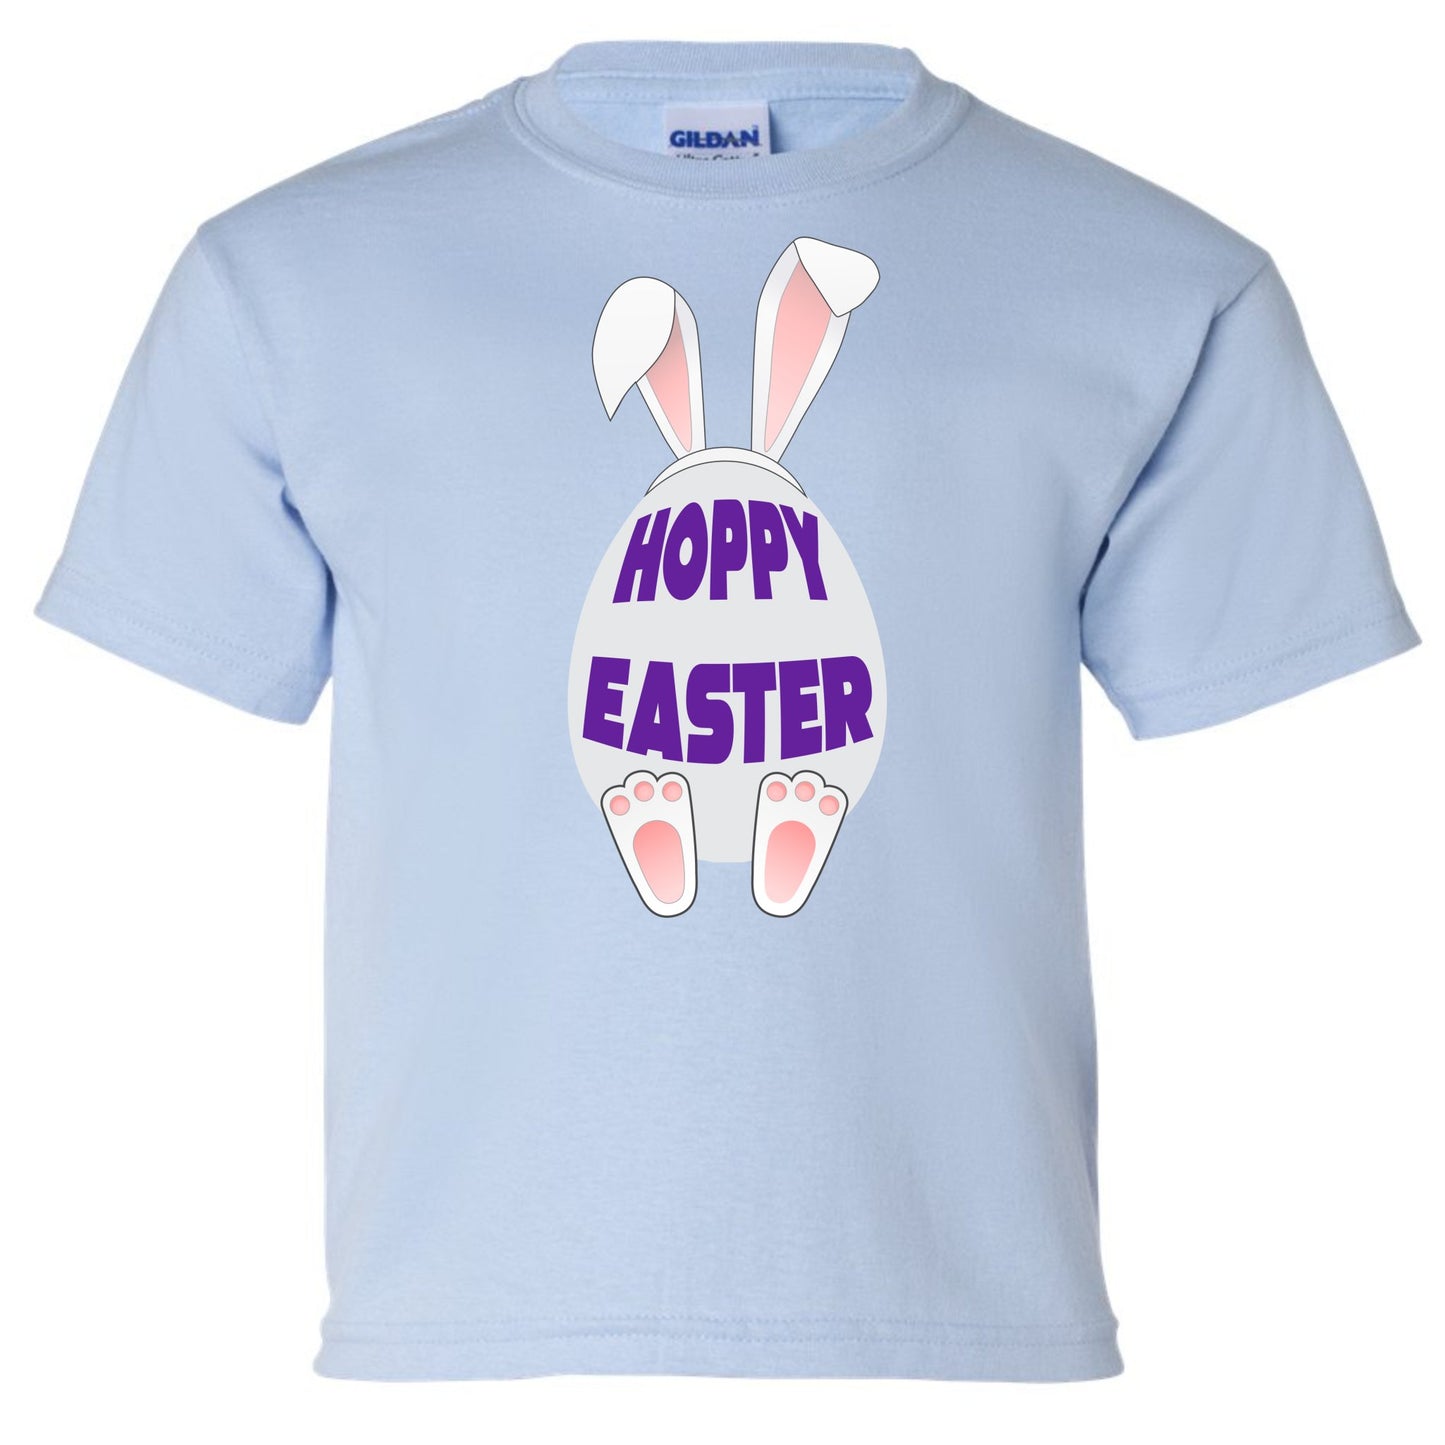 Hoppy Easter T Shirt (Infant, Toddler, or Youth) - SBS T Shop